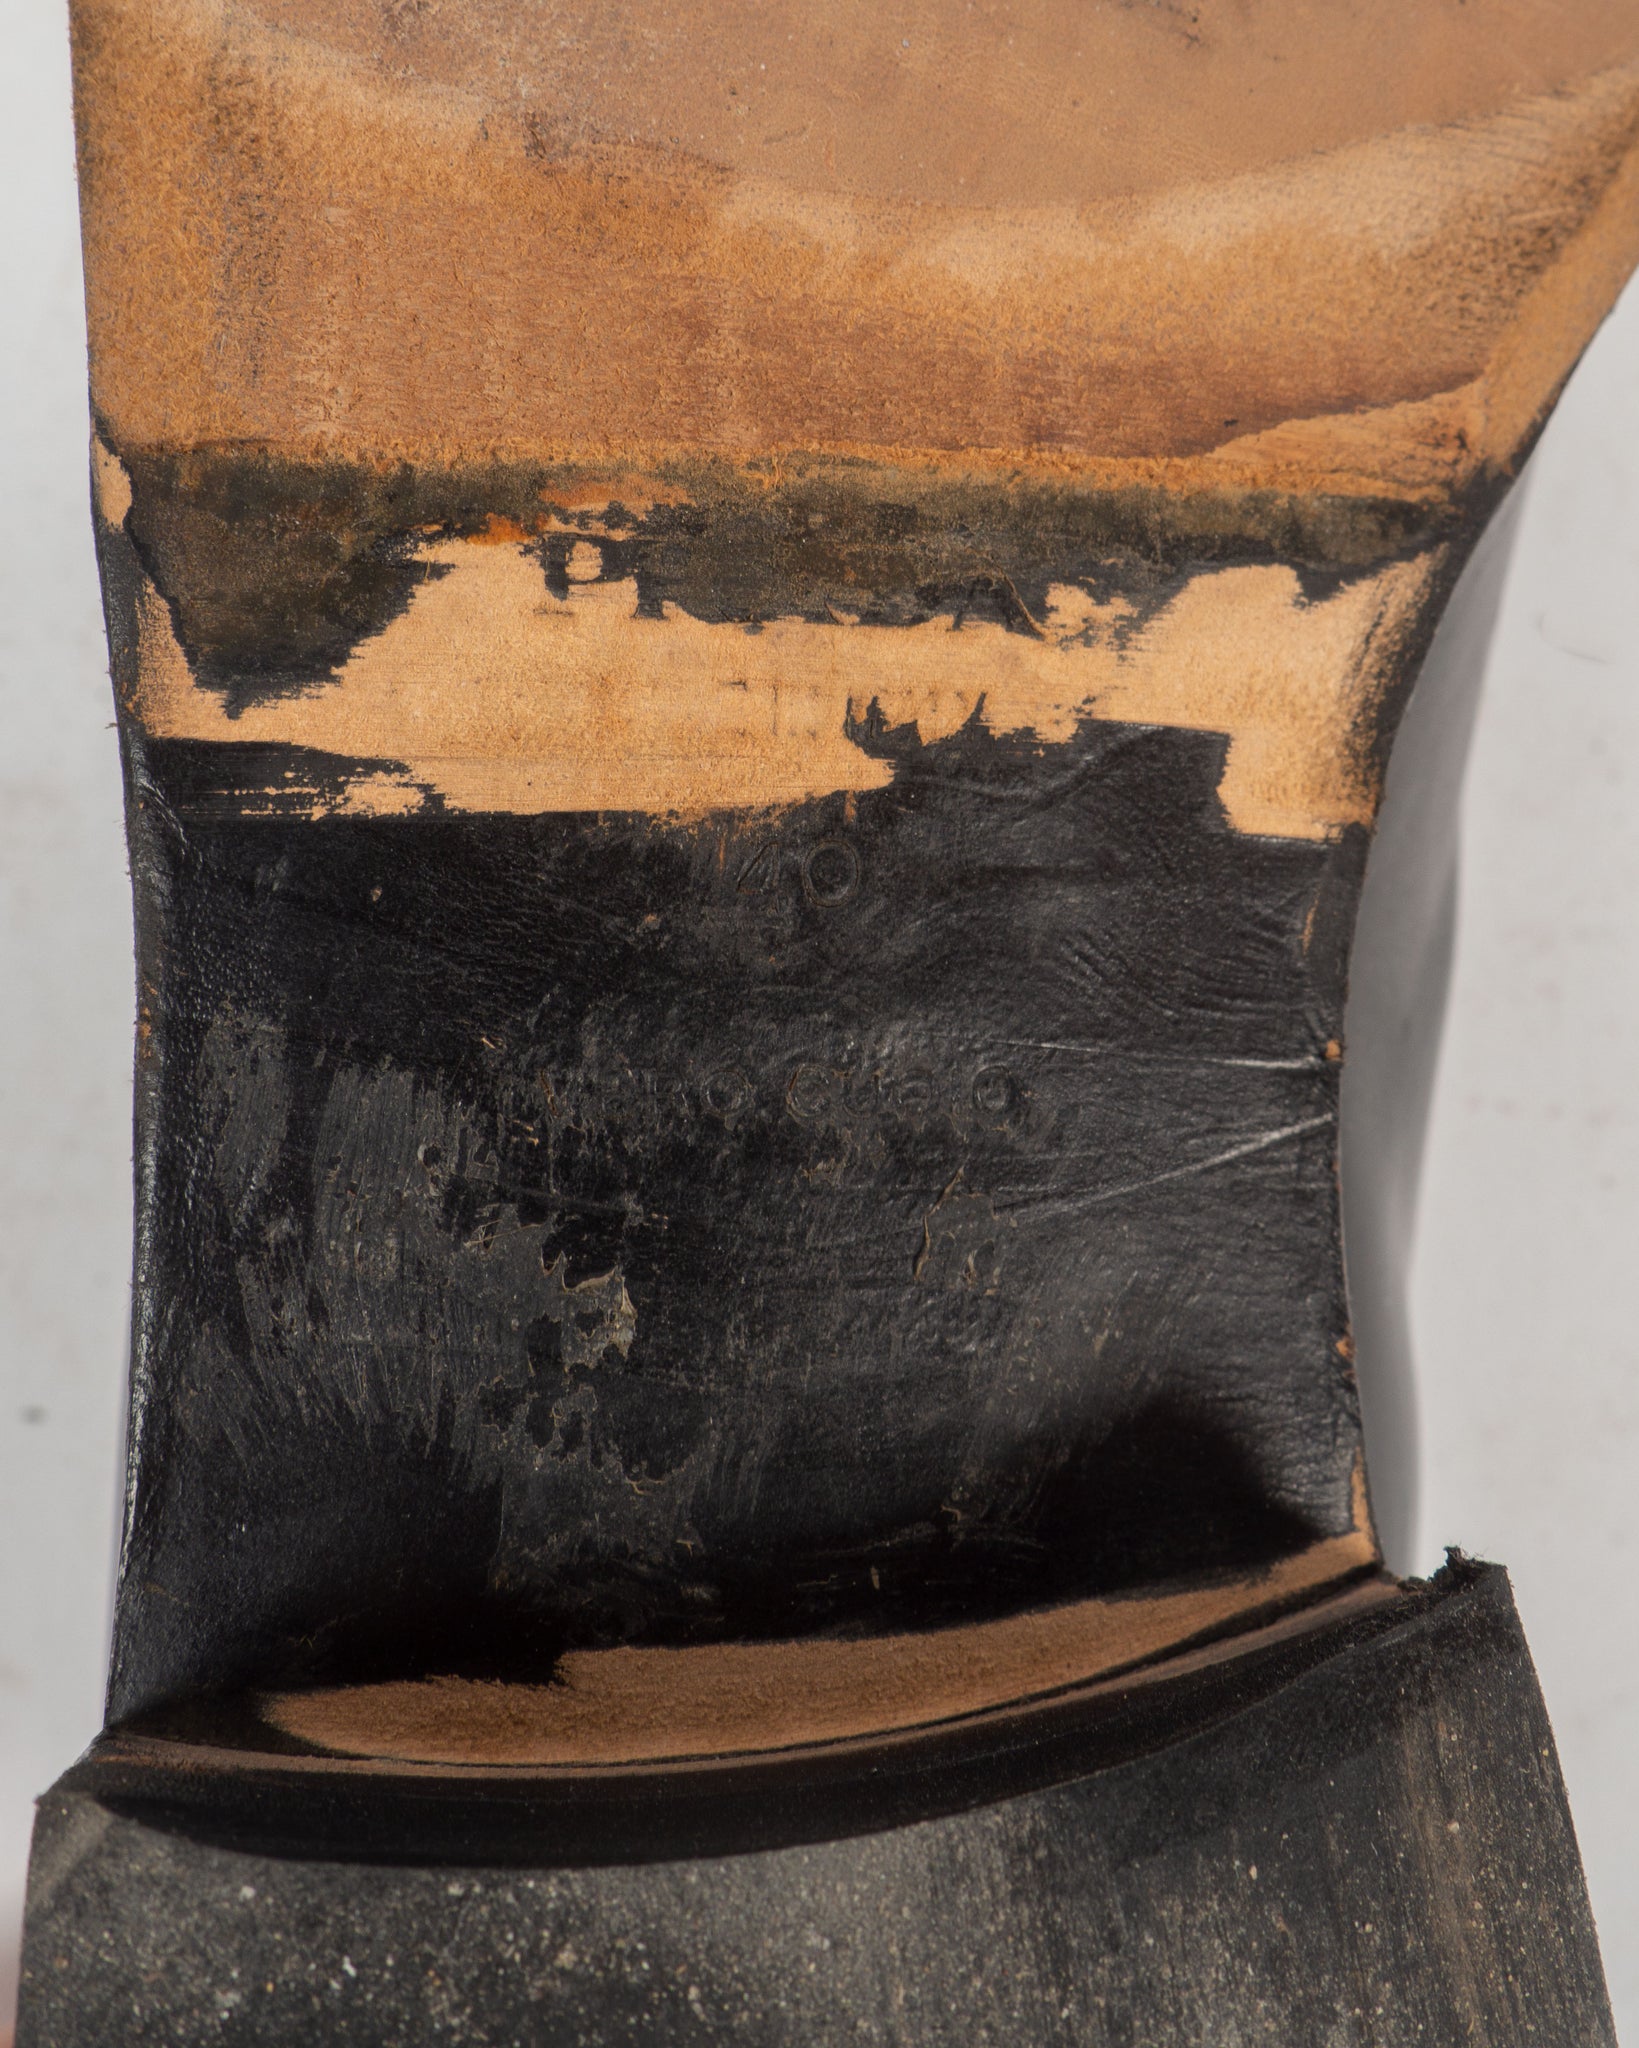 Prada Leather Loafers (40)